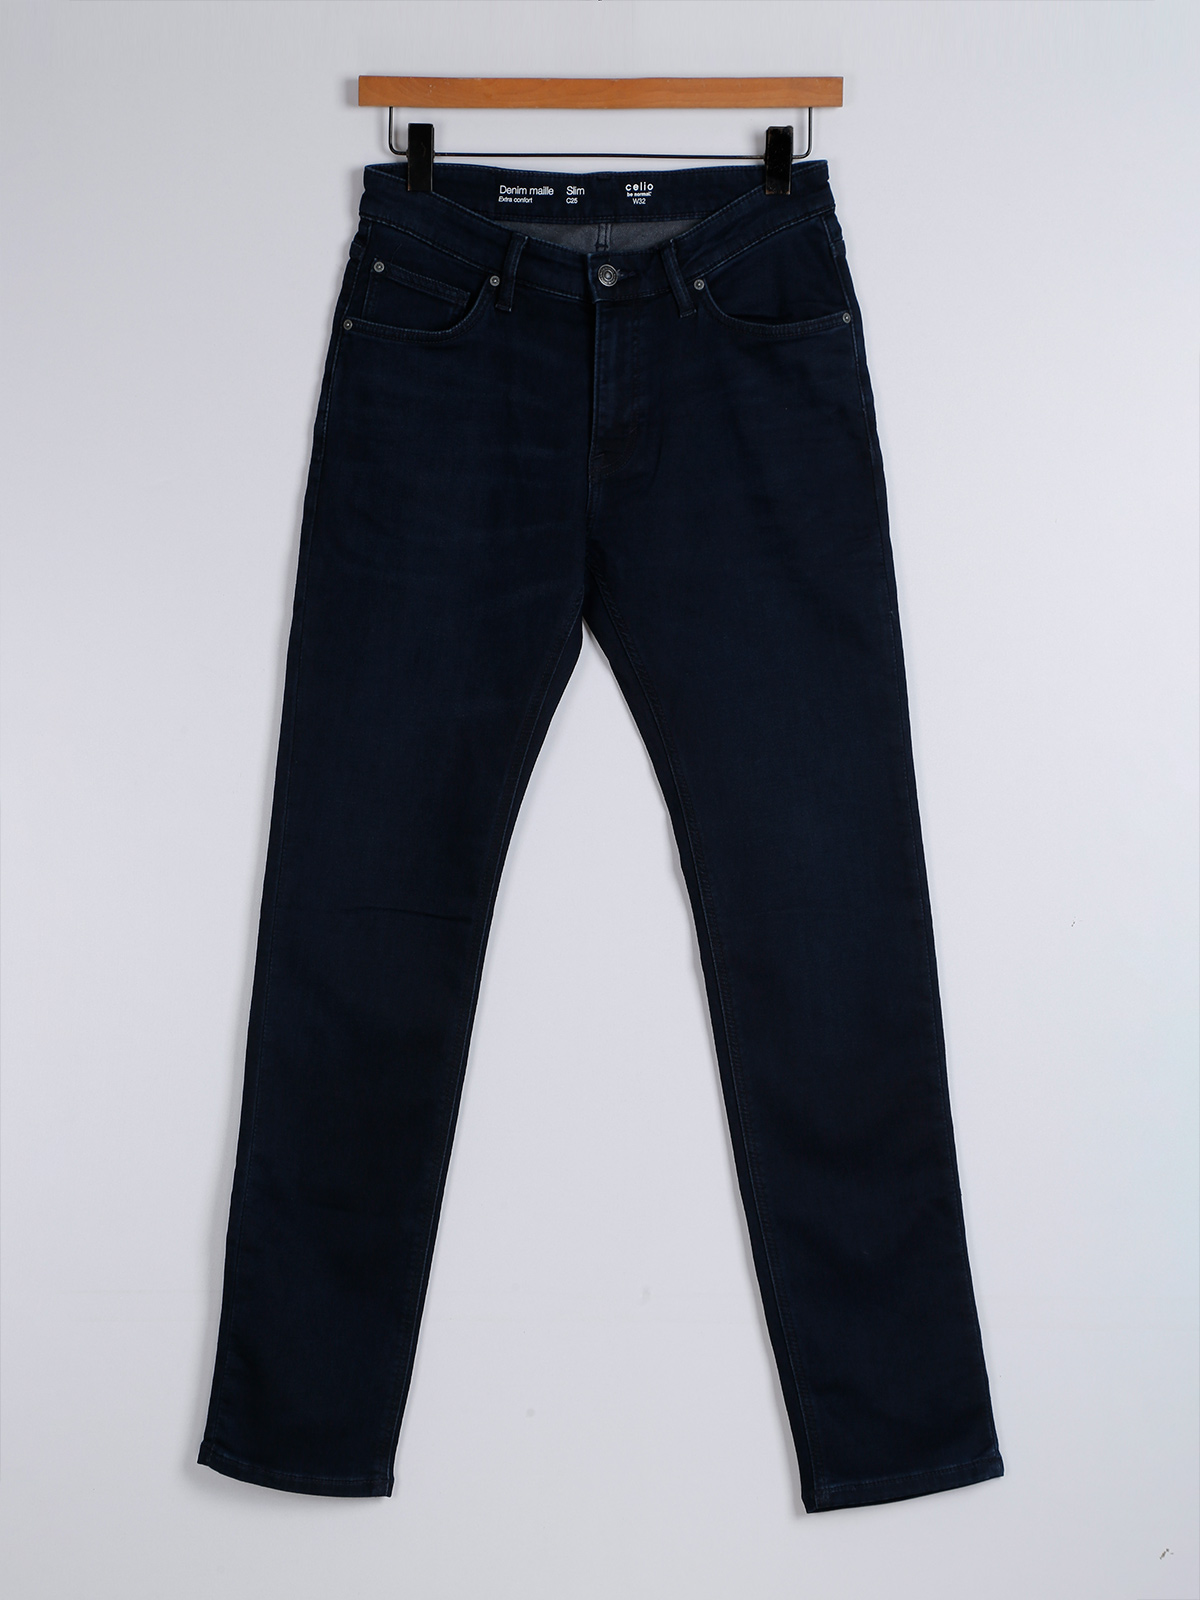 Celio solid navy jeans - G3-MJE3844